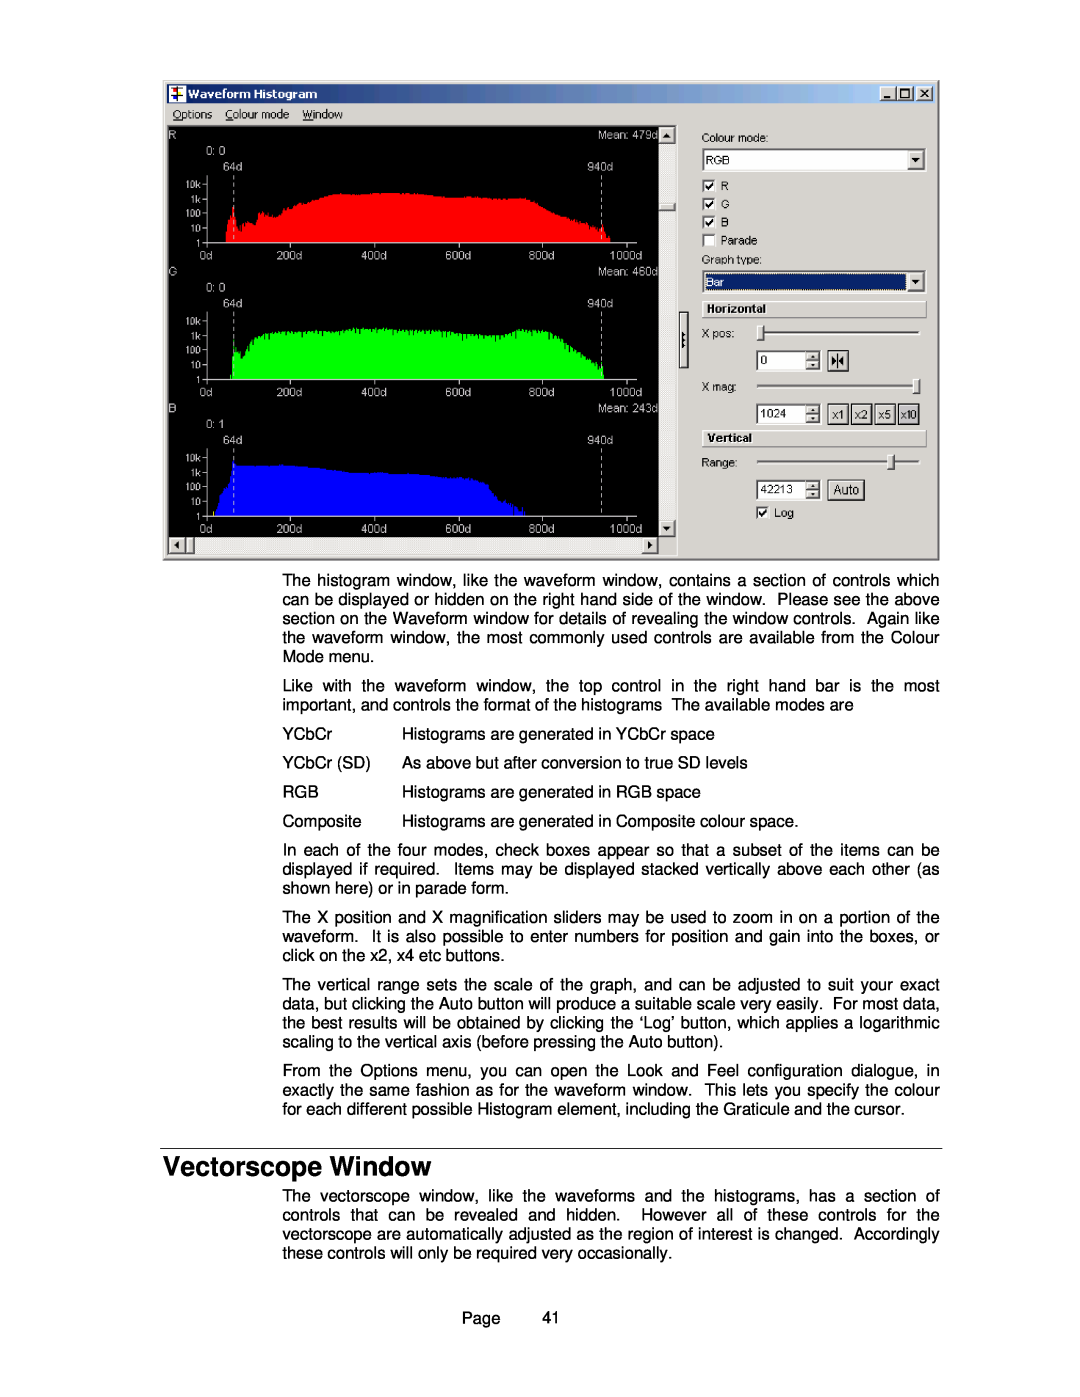 OmniTek OmniTek XR manual Vectorscope Window, Histograms are generated in Composite colour space 